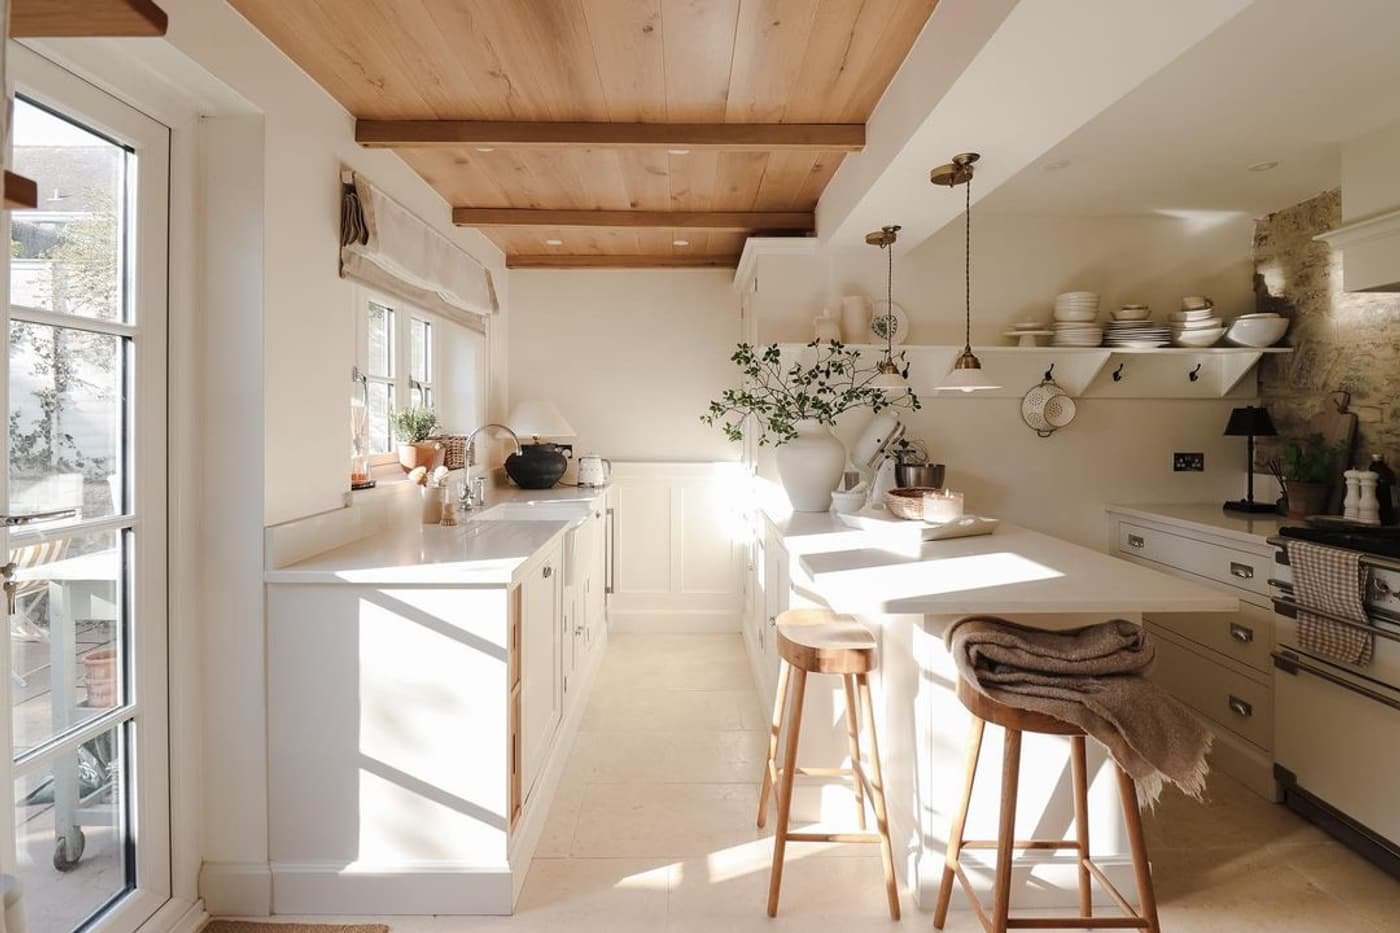 Details more than 132 tiny kitchen interior design